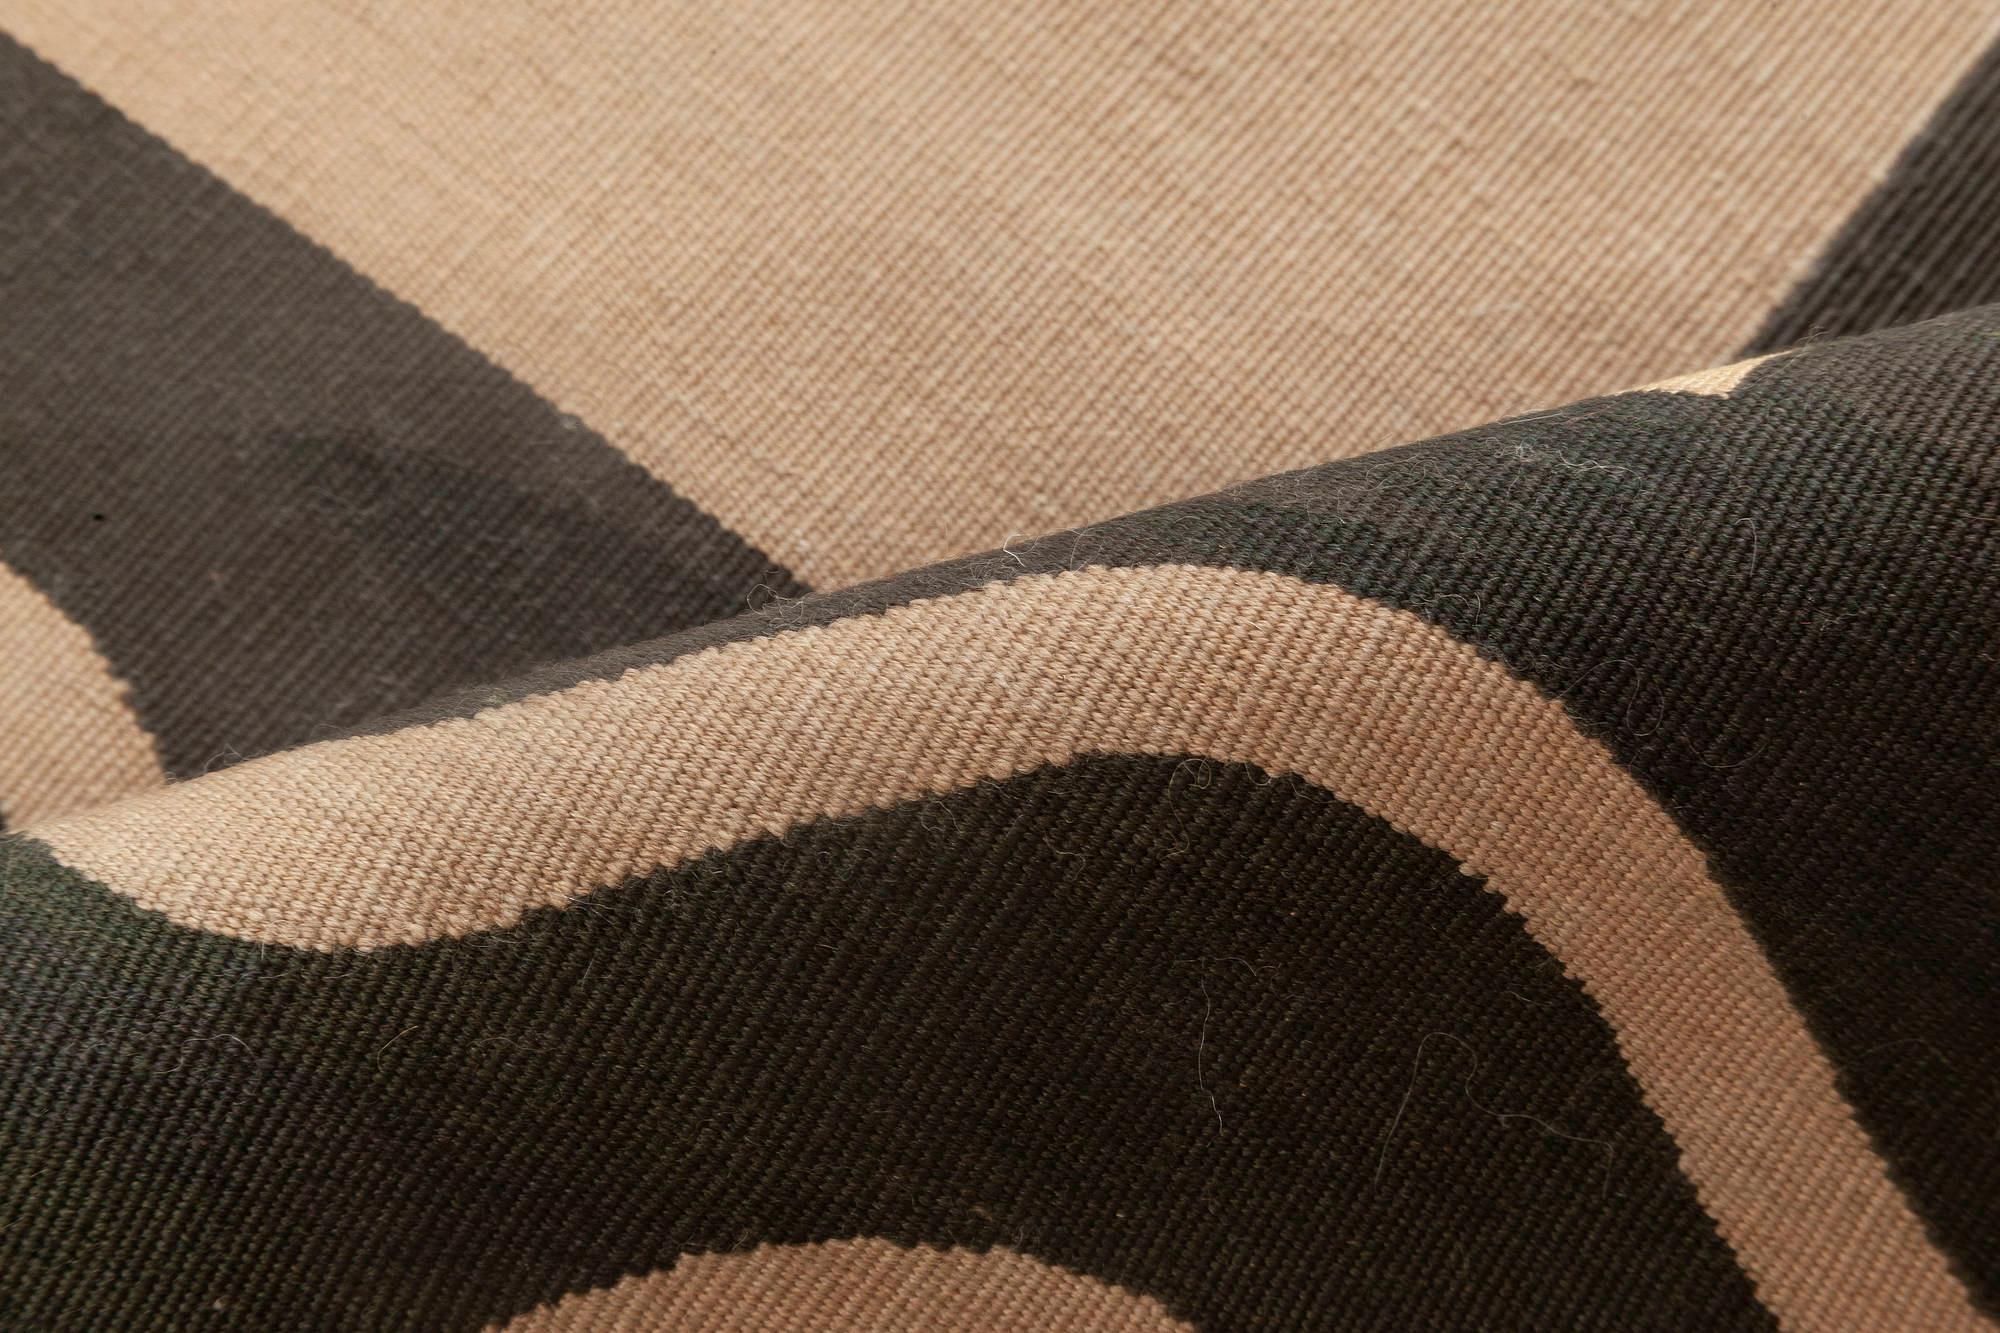 Contemporary Aubusson Geometric design handmade wool rug by Doris Leslie Blau
Size: 3'6